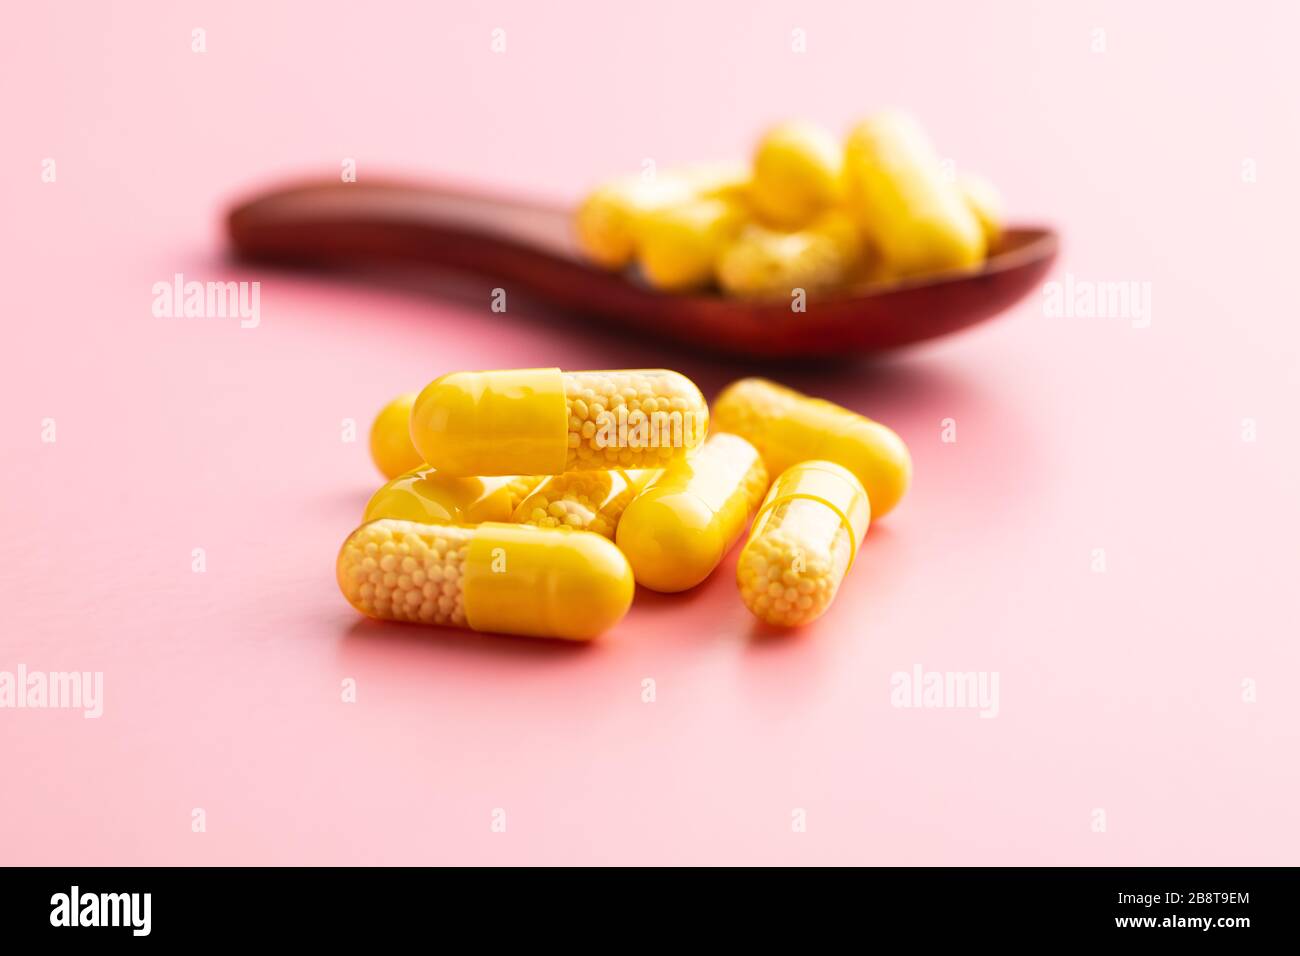 Vitamin capsules. Vitamin C pills on pink background. Stock Photo